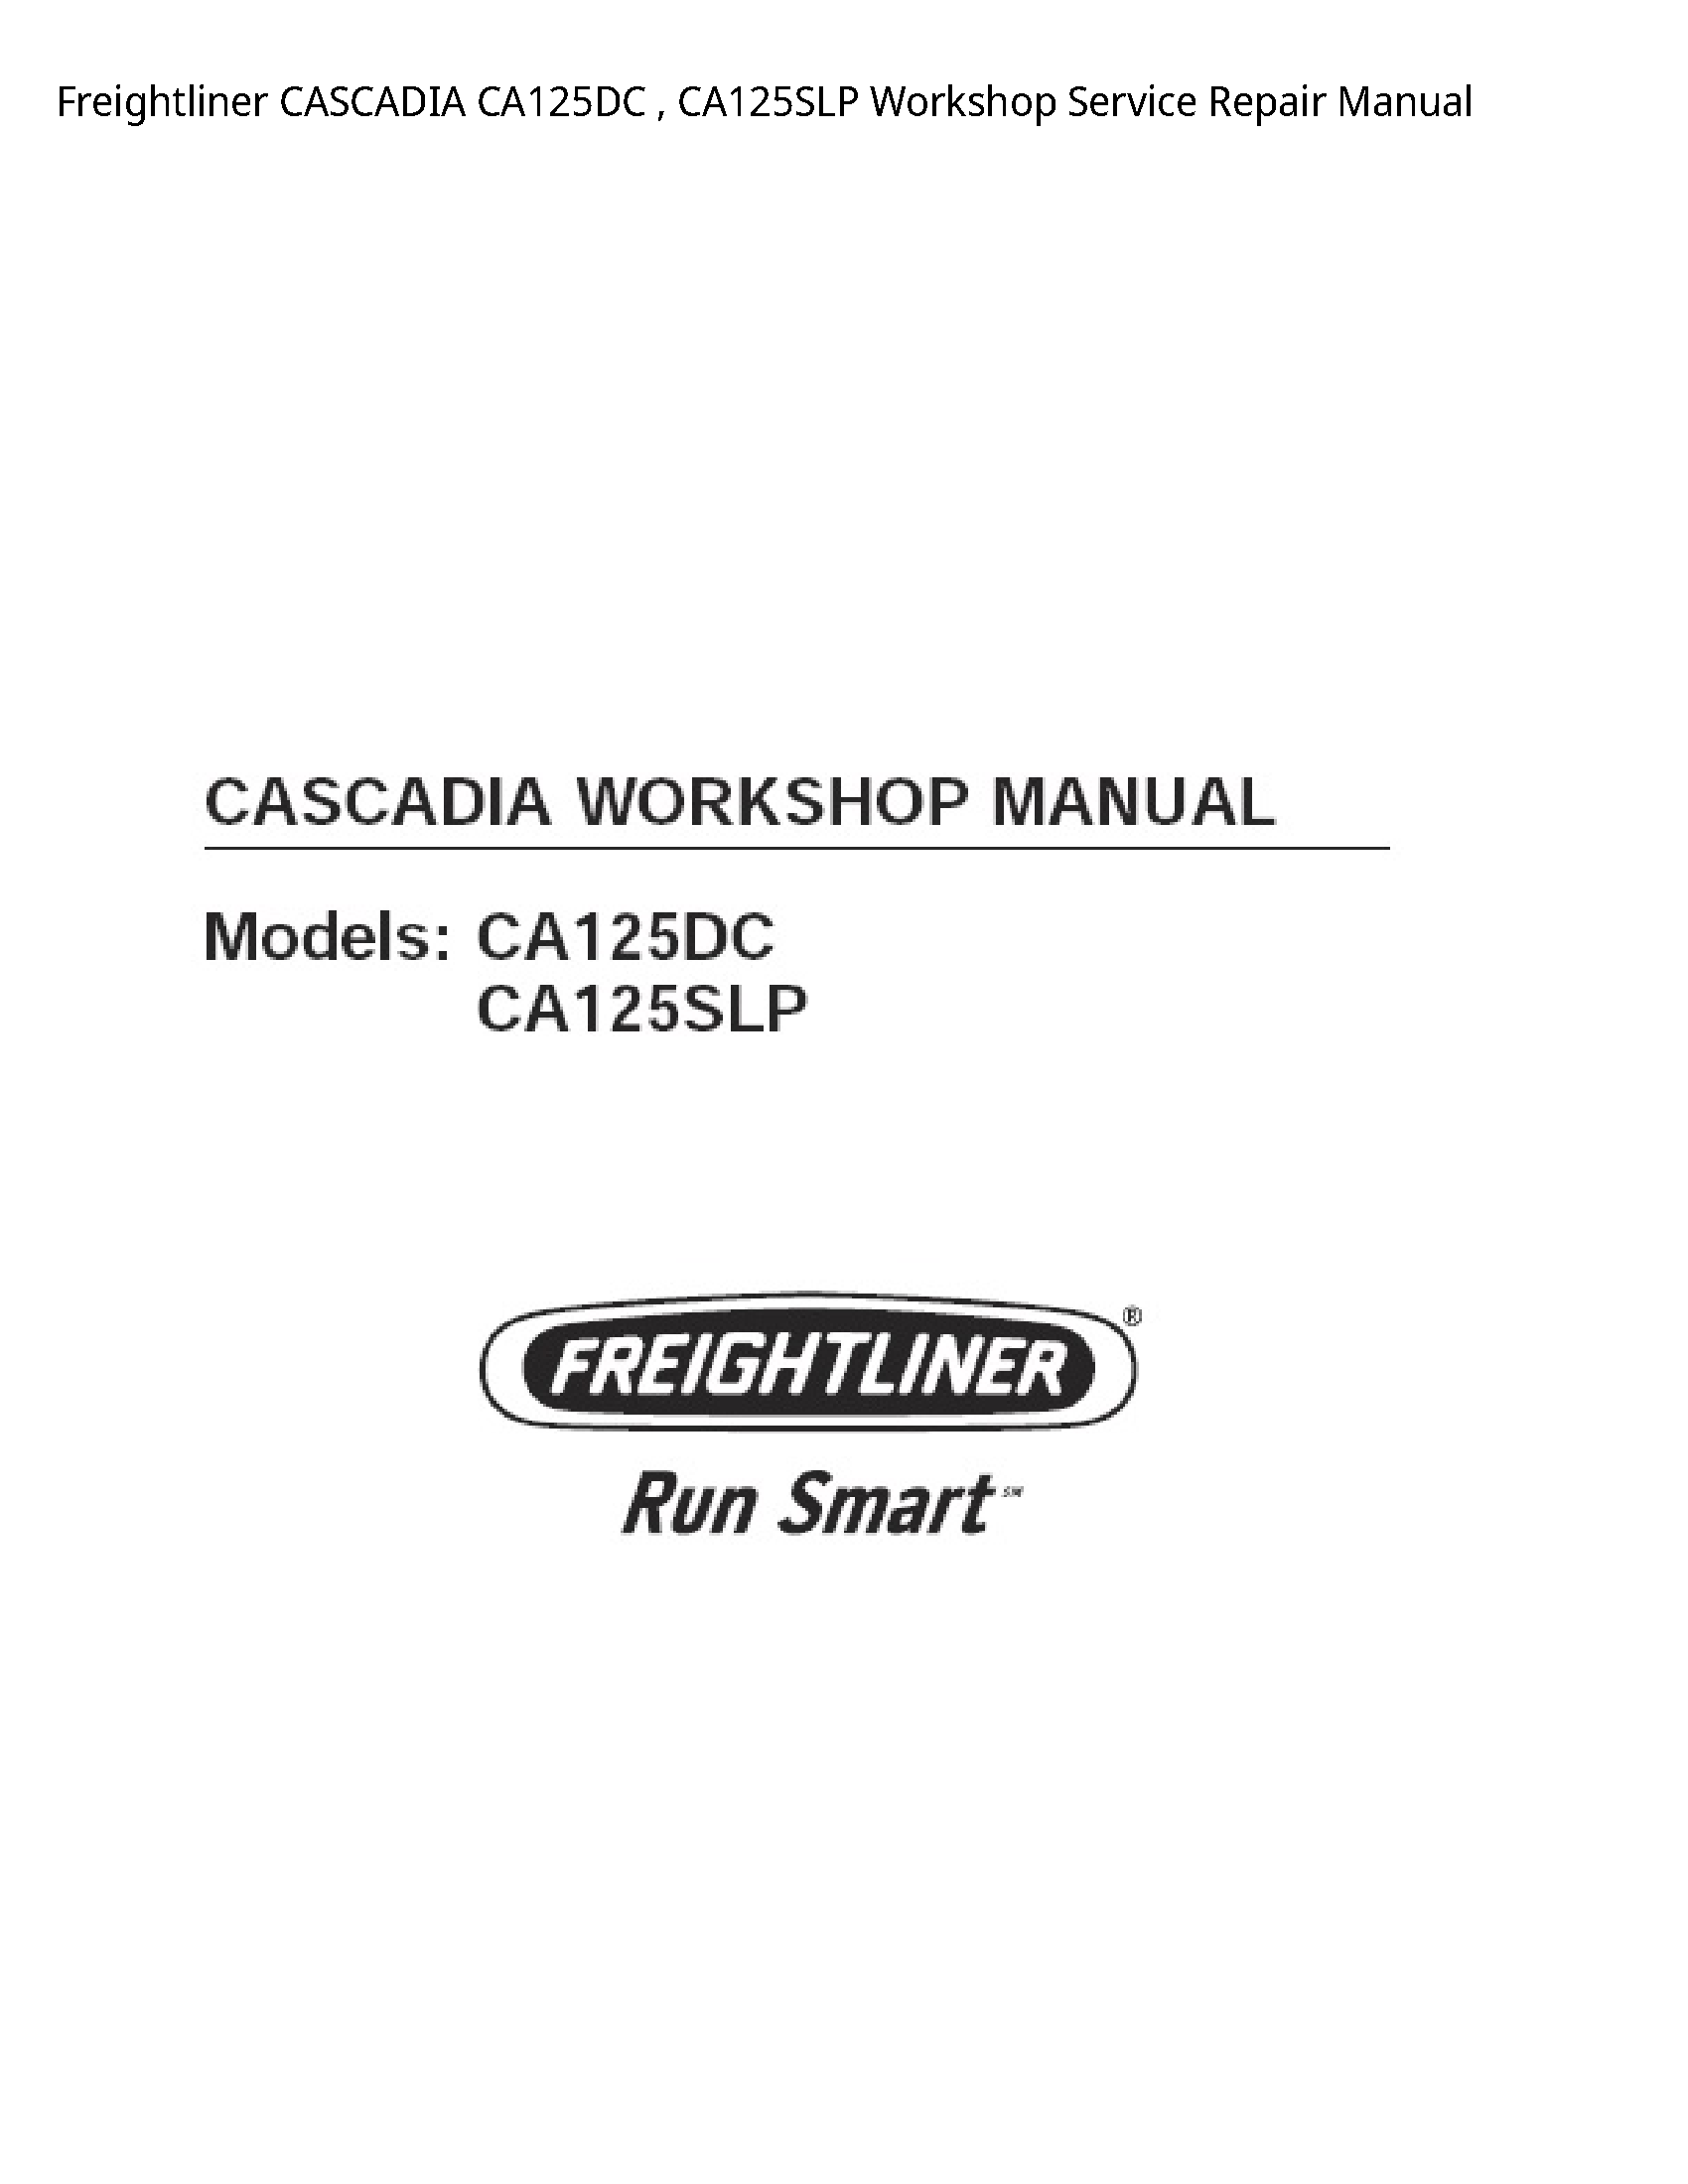 Freightliner CA125DC CASCADIA manual